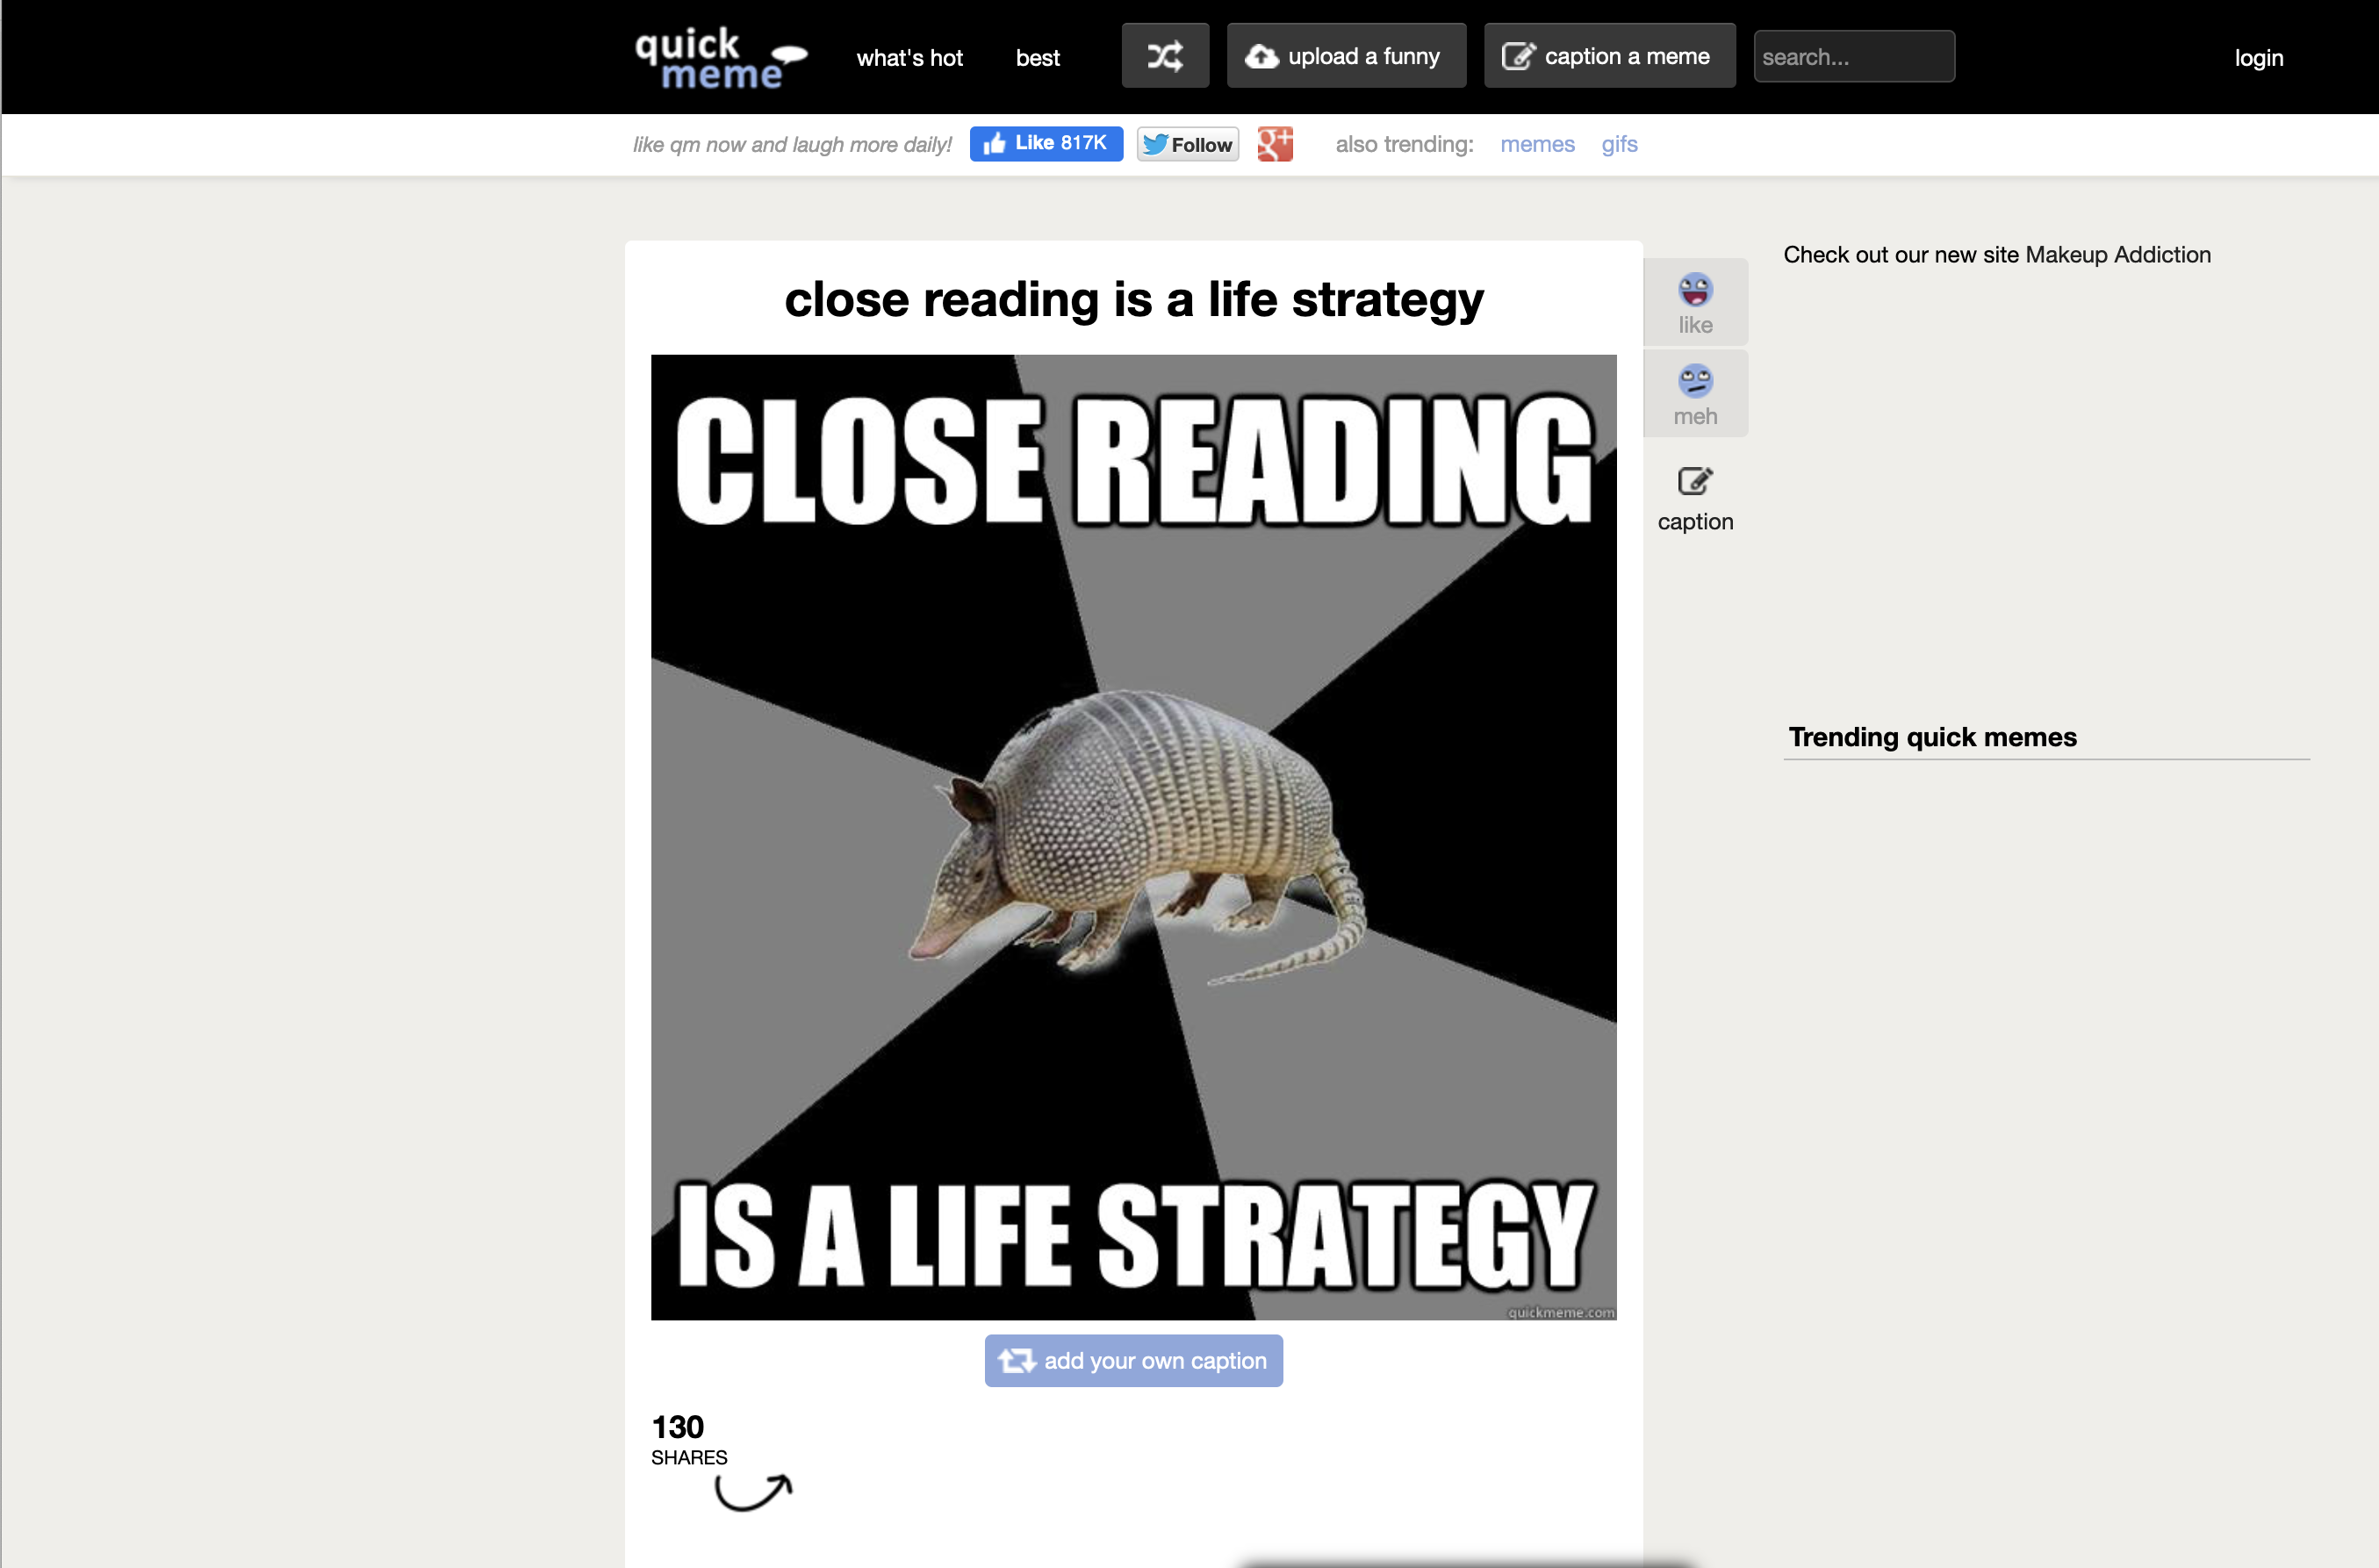 Meme of close reading armadillo